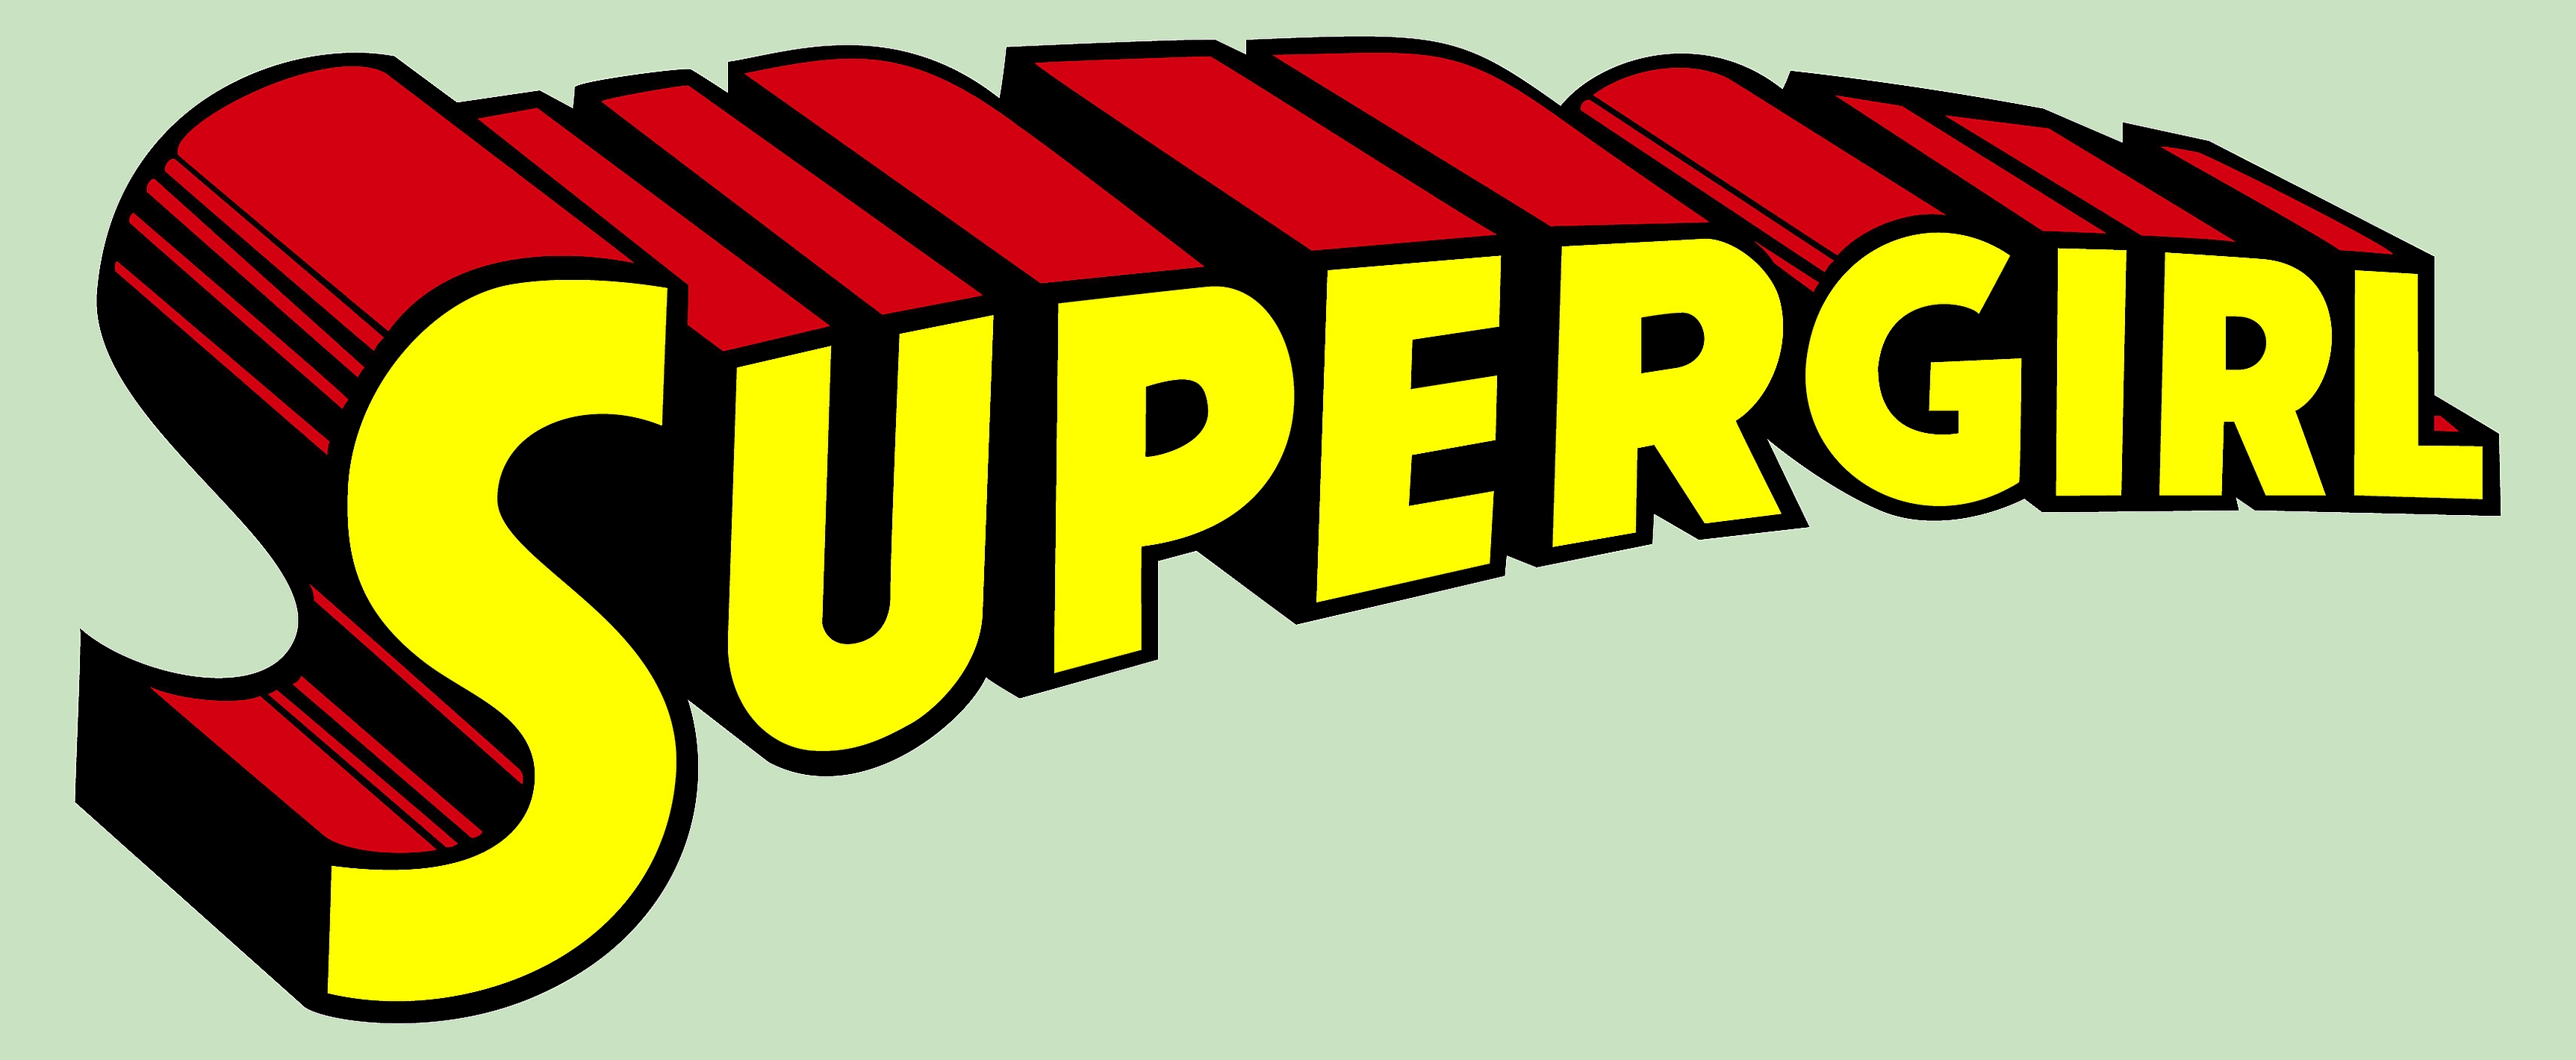 Super. Супергерл надпись. Надпись супер девочка. Надпись Супердевушка. Надпись super girl на белом фоне.